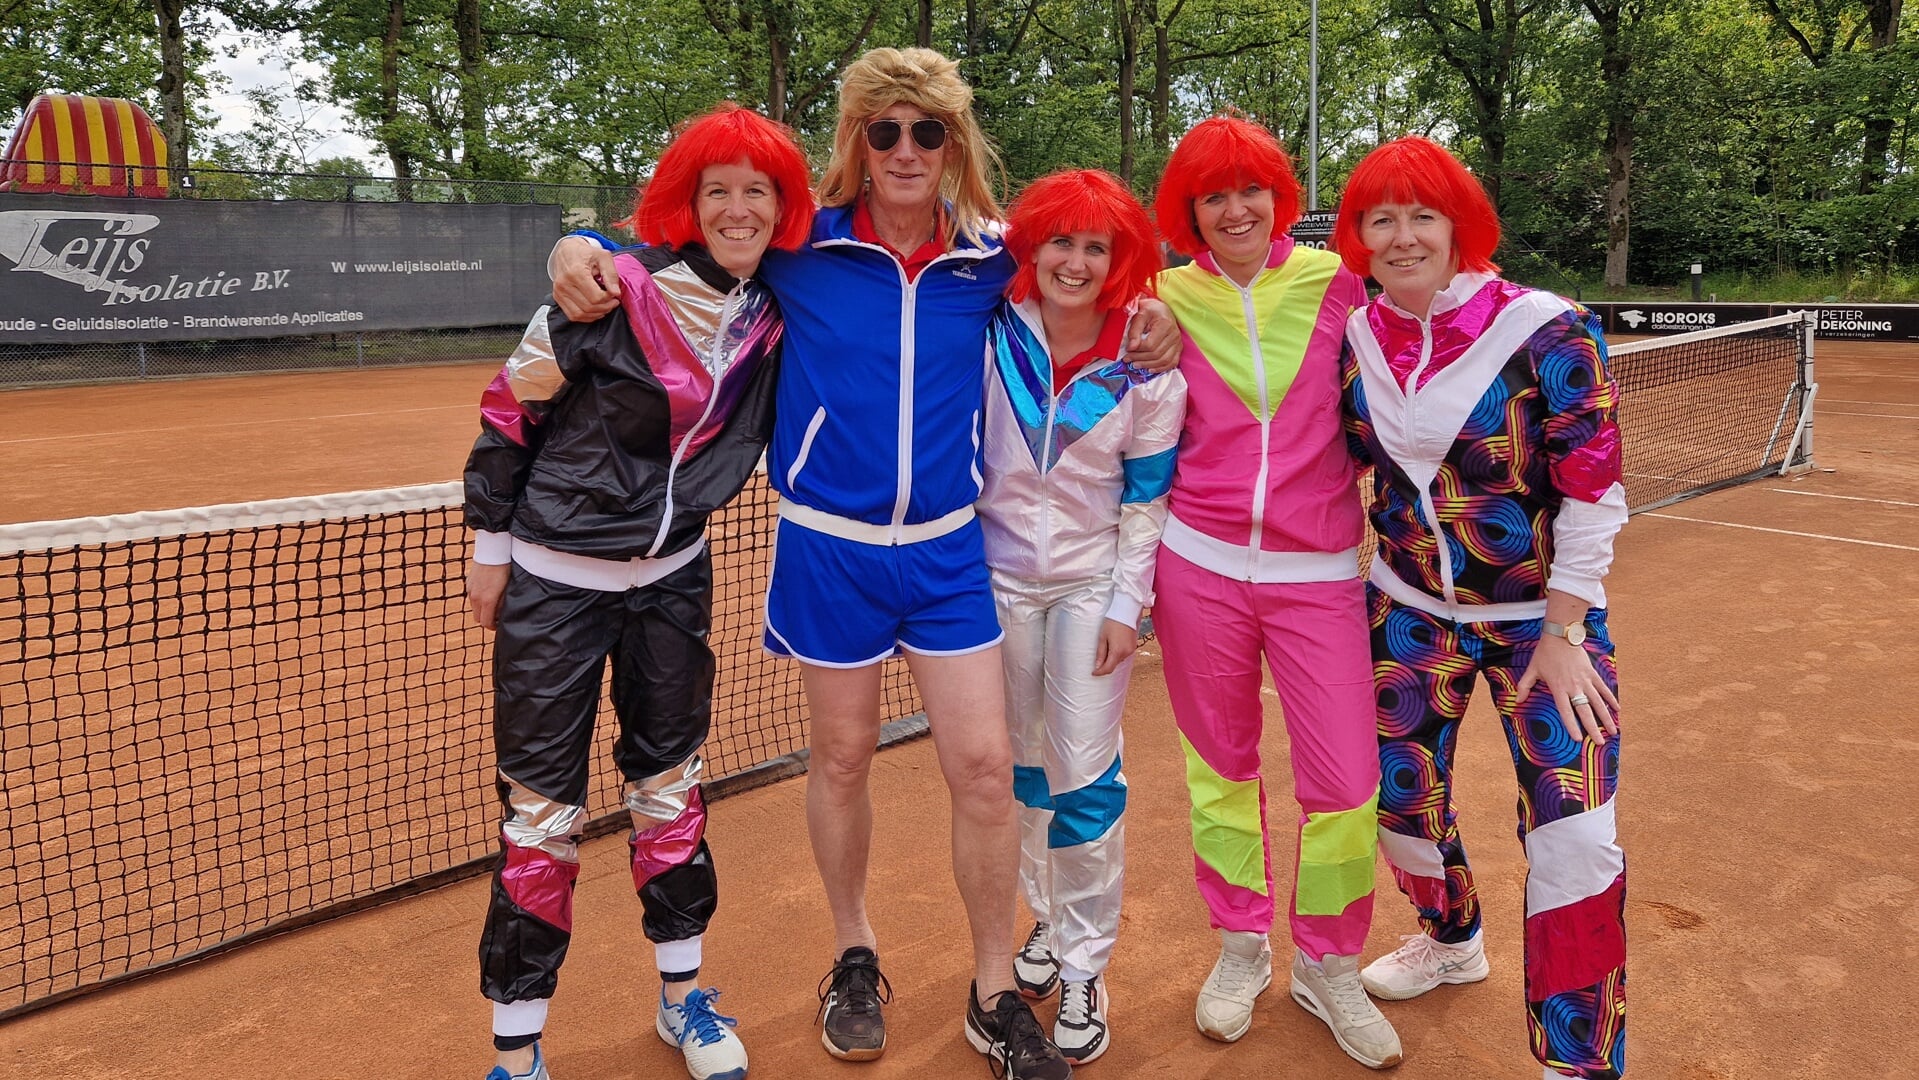 Jubilerende tennisvereniging Rico timmert aan de weg